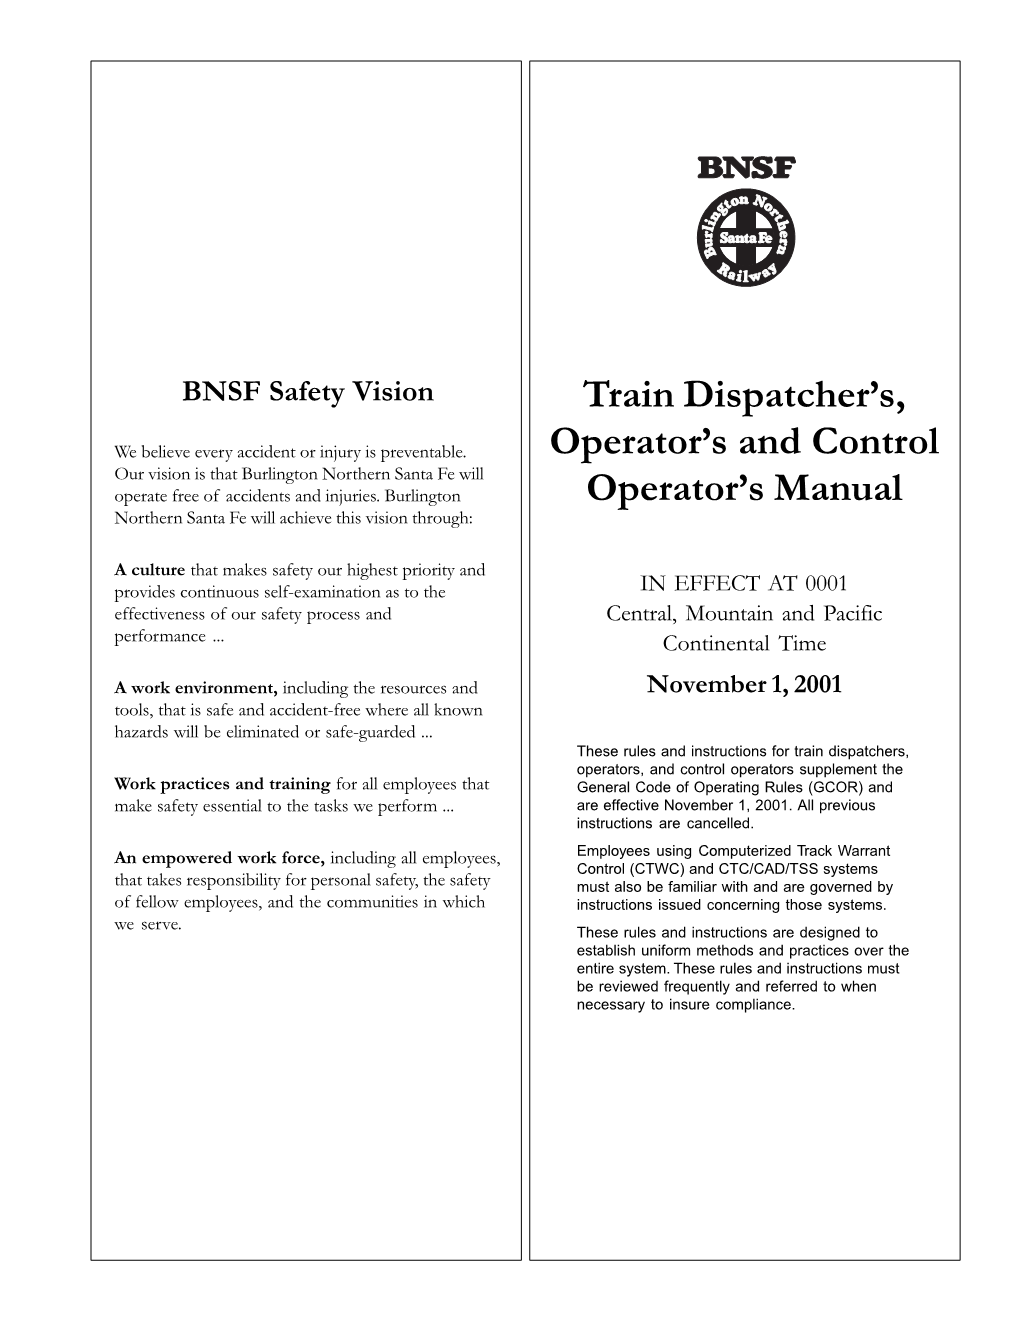 Train Dispatcher's, Operator's and Control Operator's Manual